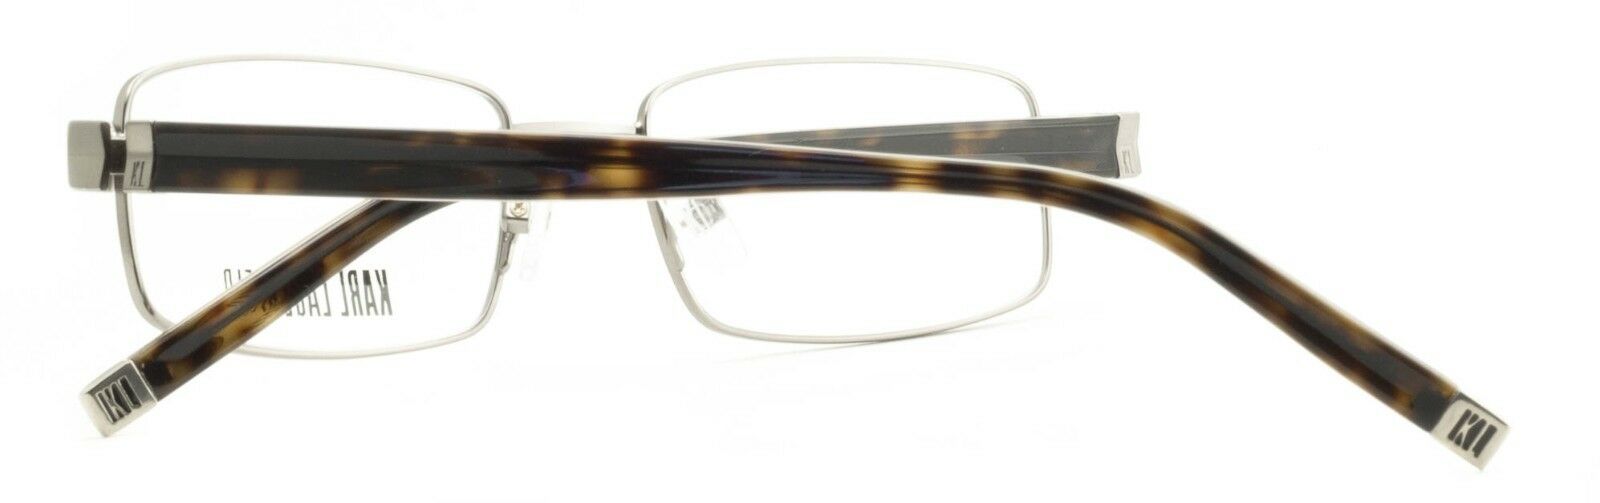 KARL LAGERFELD KL 142 503 Eyewear FRAMES NEW RX Optical Eyeglasses Glasses - New